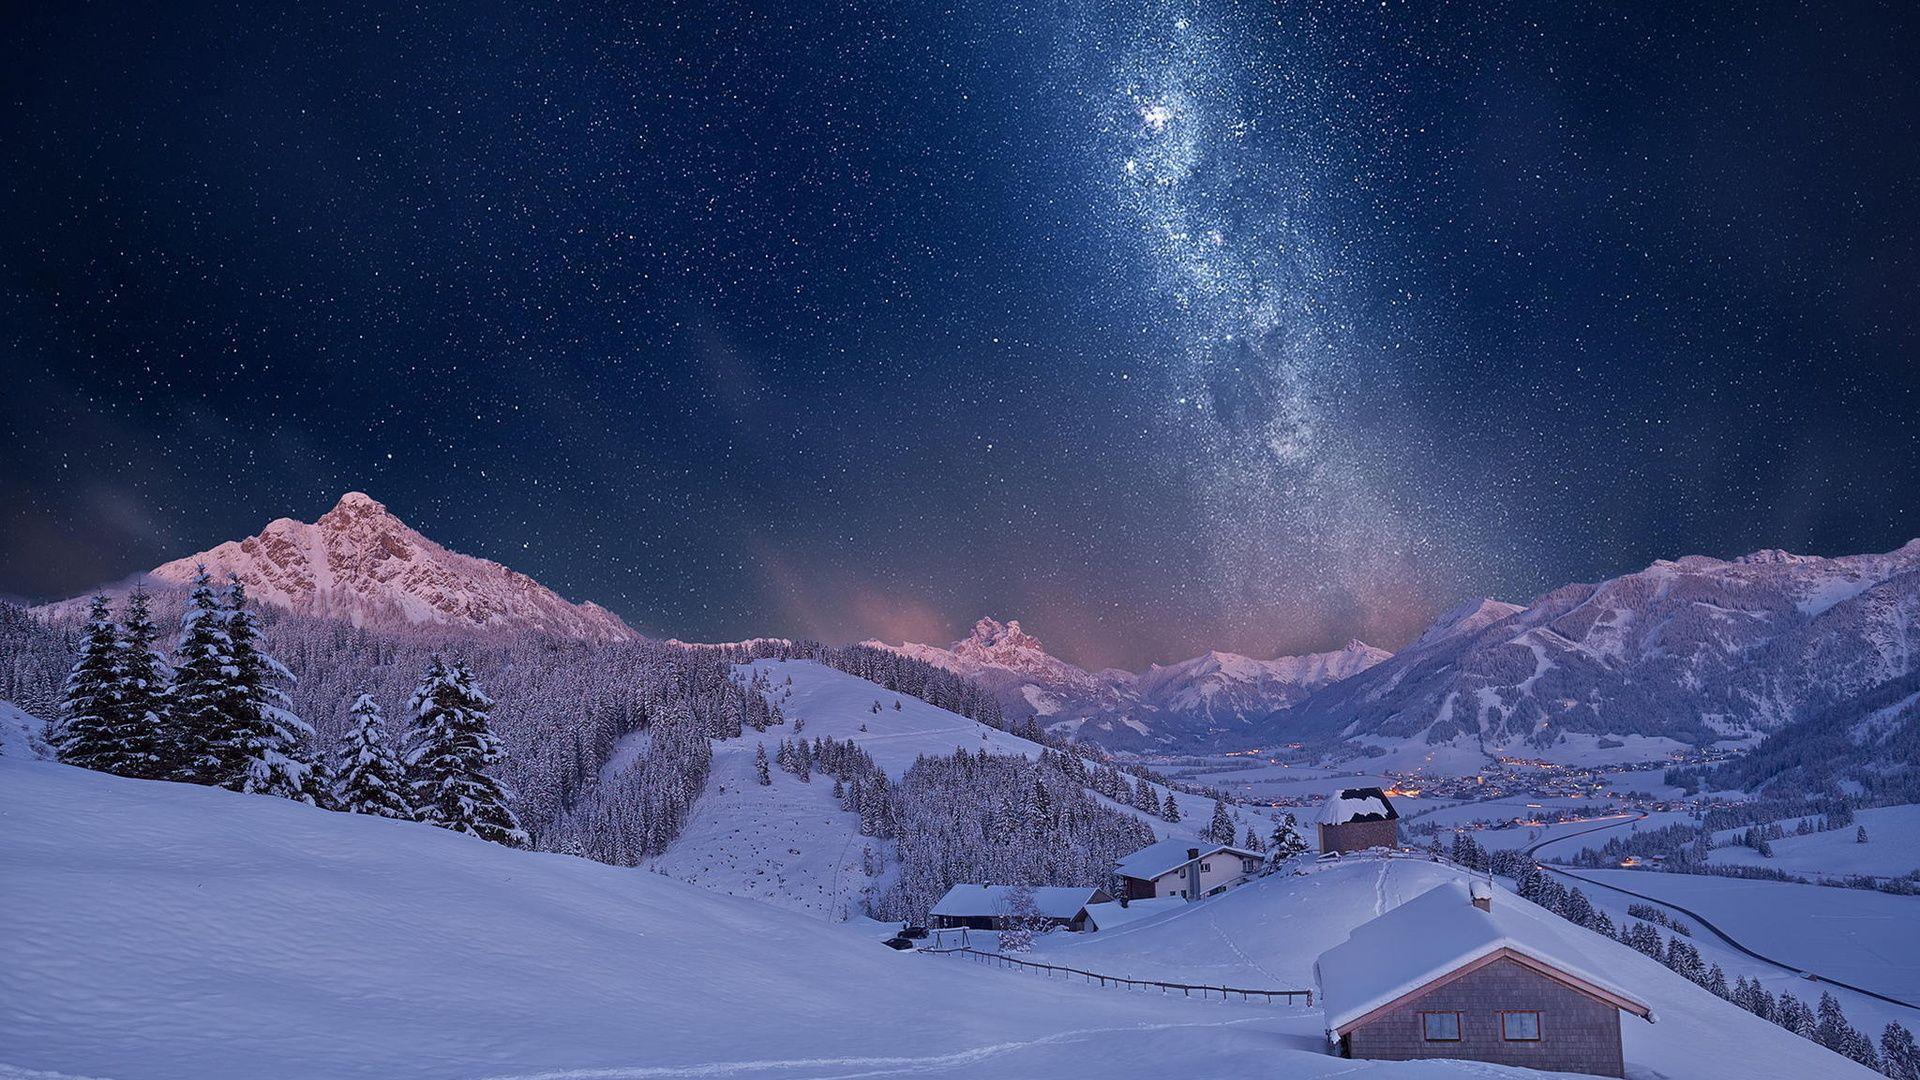 Winter Night Sky Hd Wallpapers - Top Free Winter Night Sky Hd